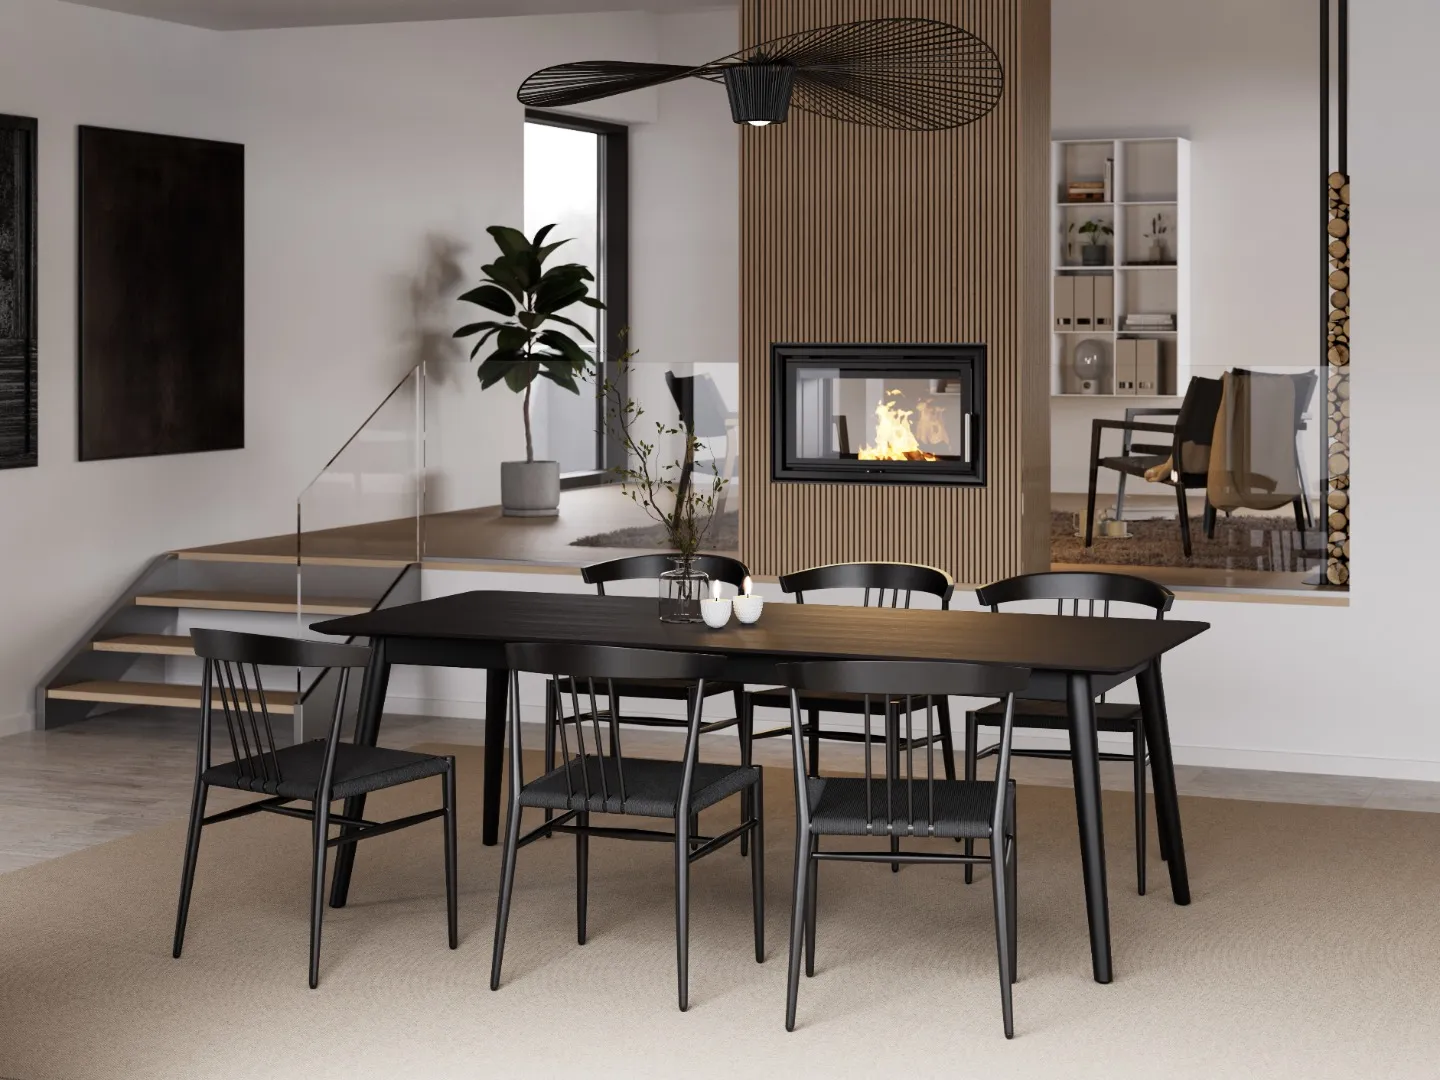 DAN-FORM's SAVA chairs in black paper cord around the YOLO table in a Scandinavian villa